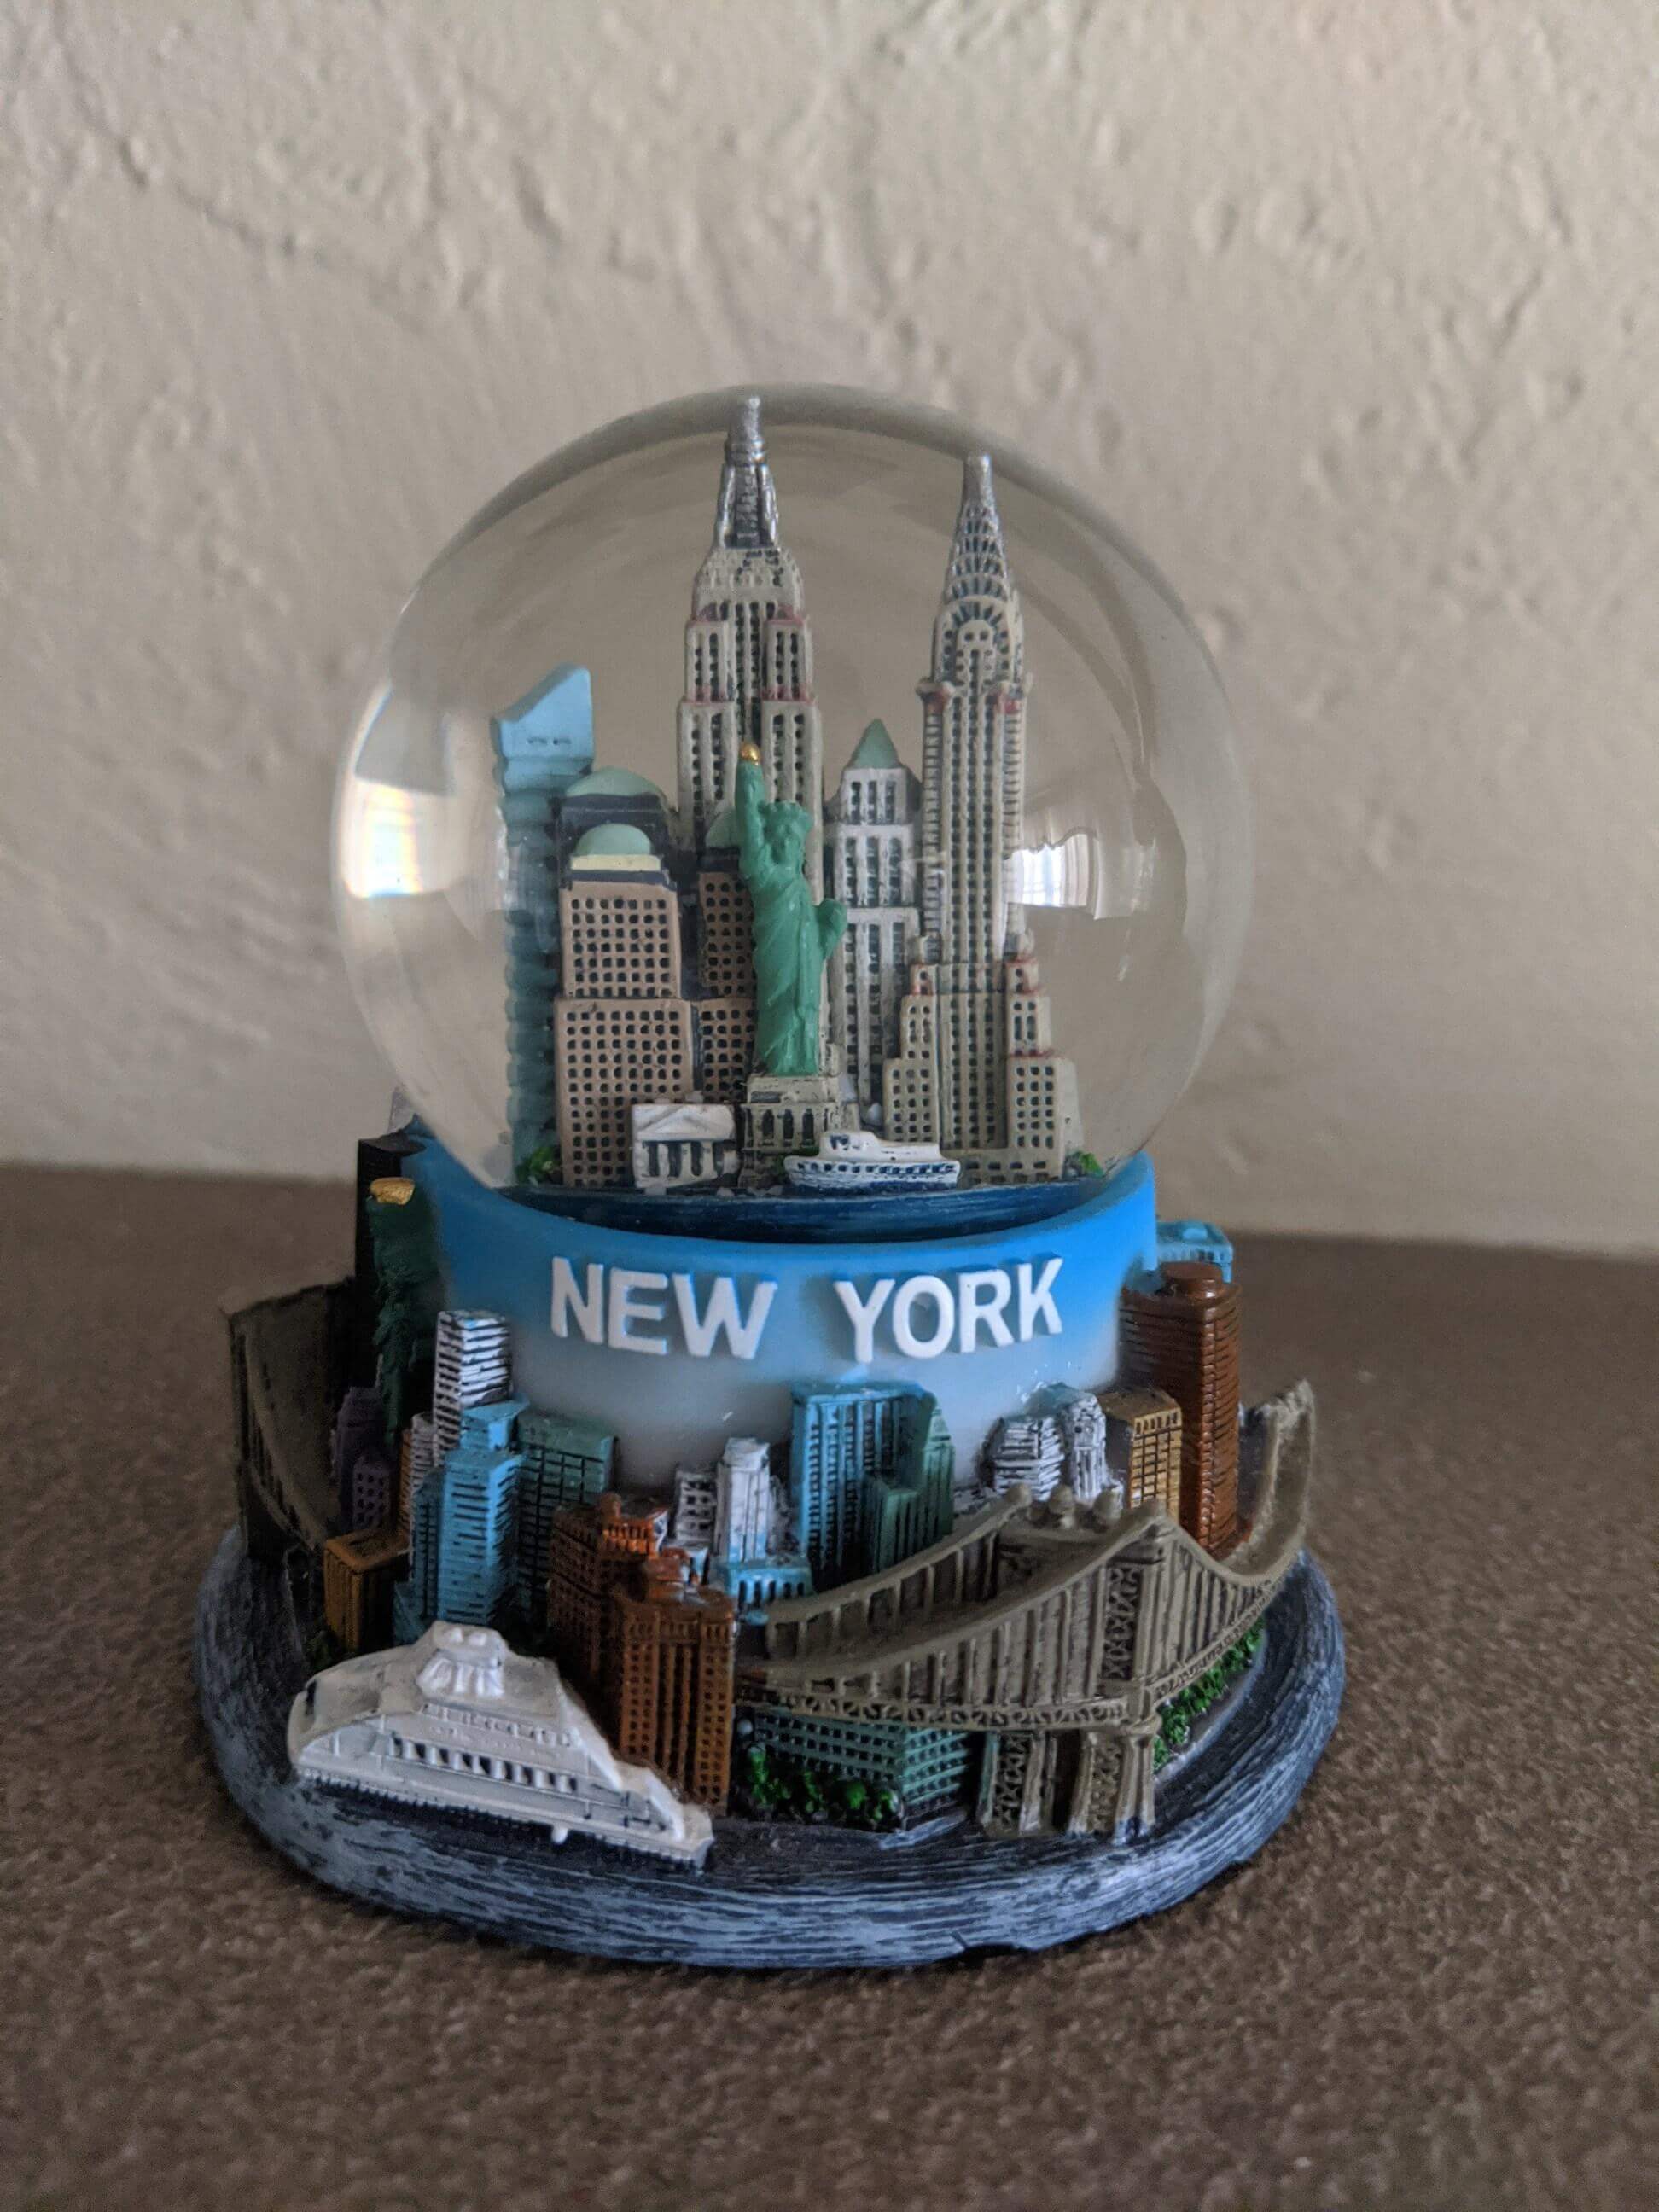 NYC snow globe